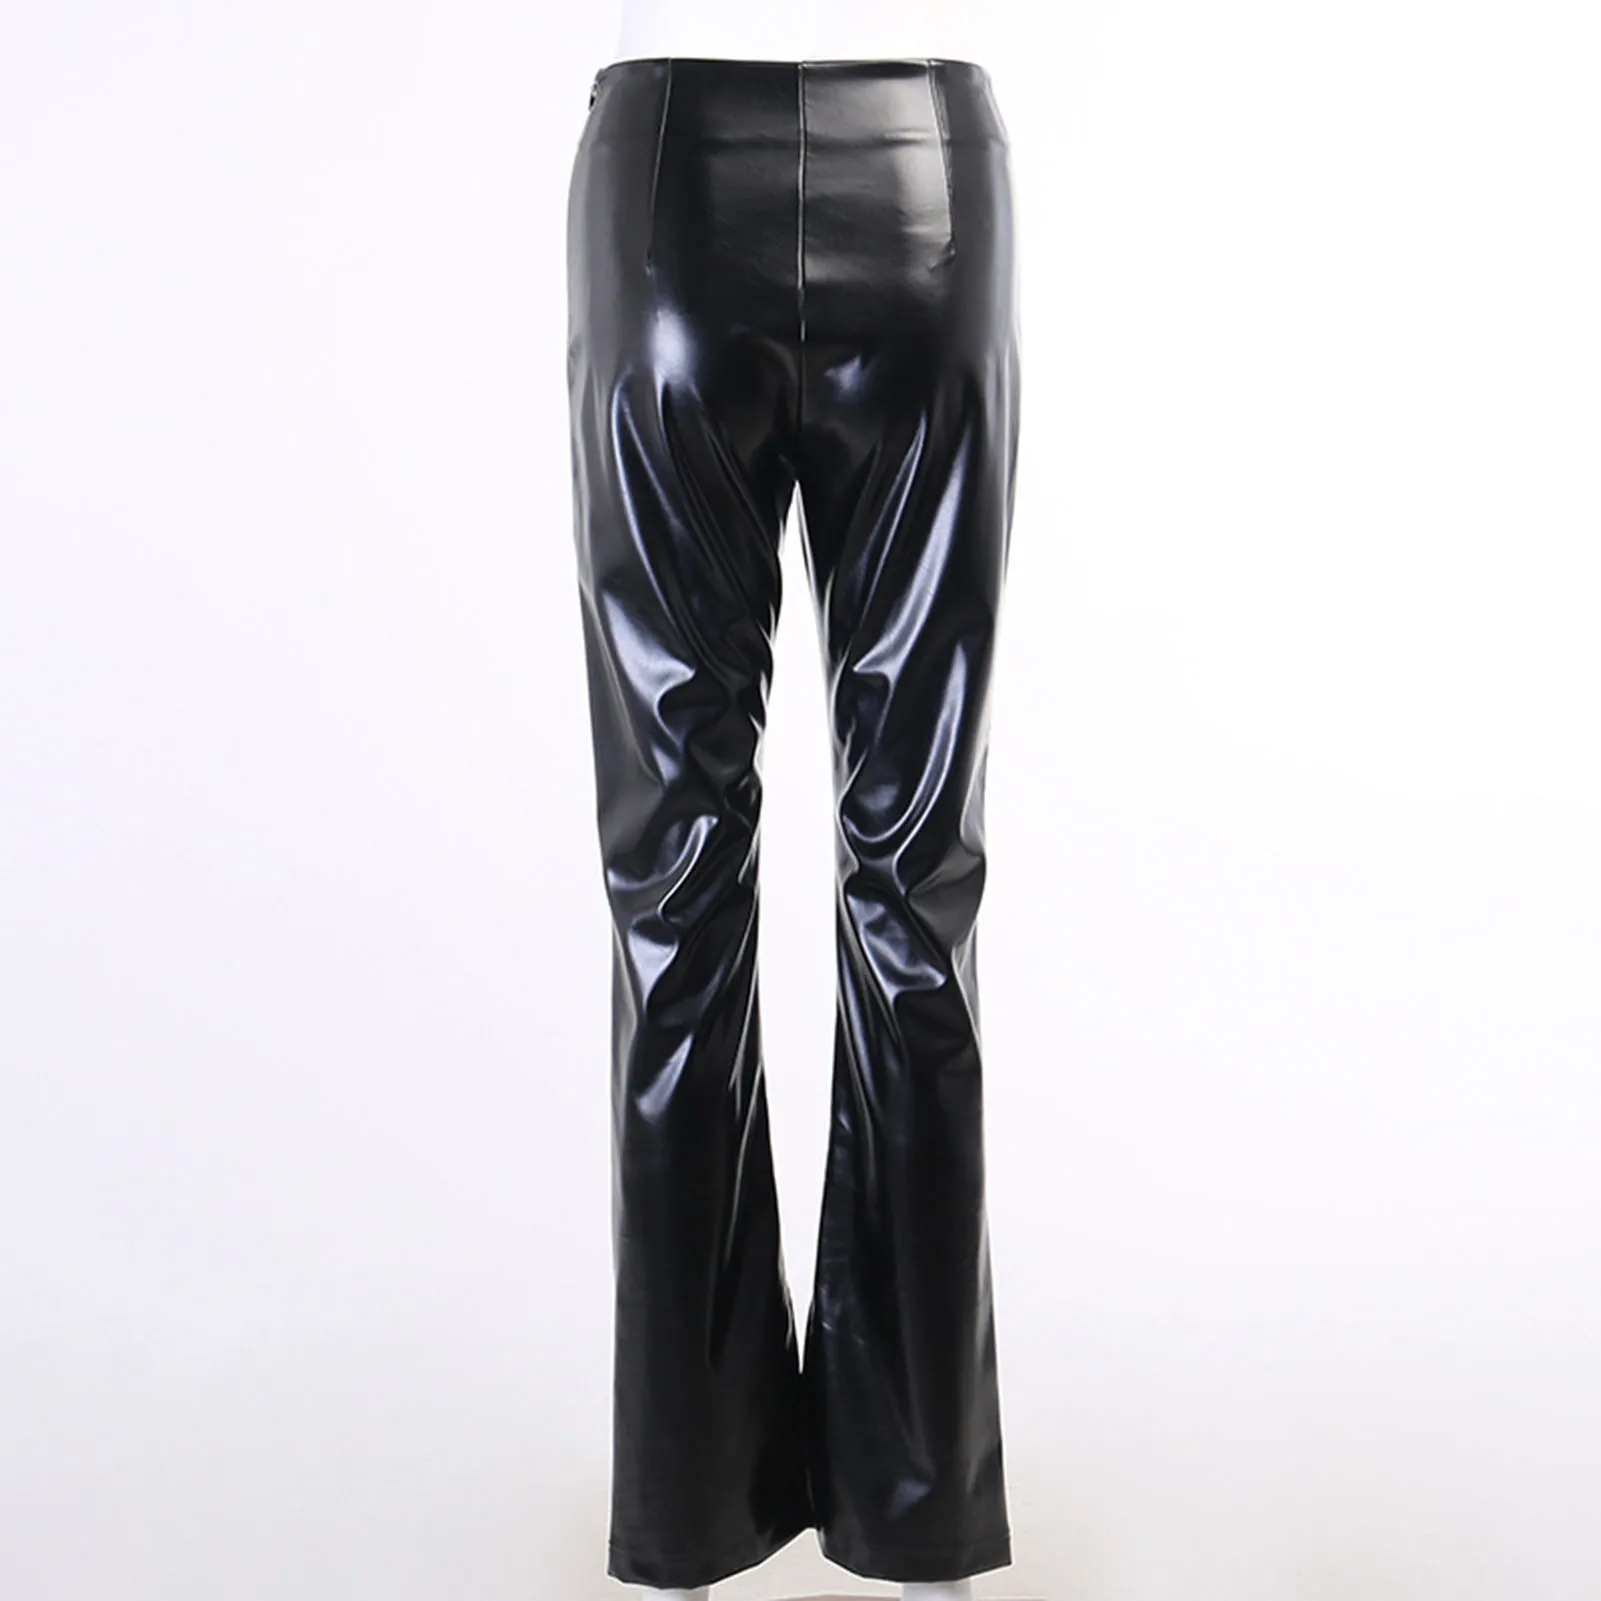 

Midnight Faux PU Leather Skinny Pants Ribbon Criss Cross Women High Waist Pencil Trousers Fashion Fall 2020 Clothing